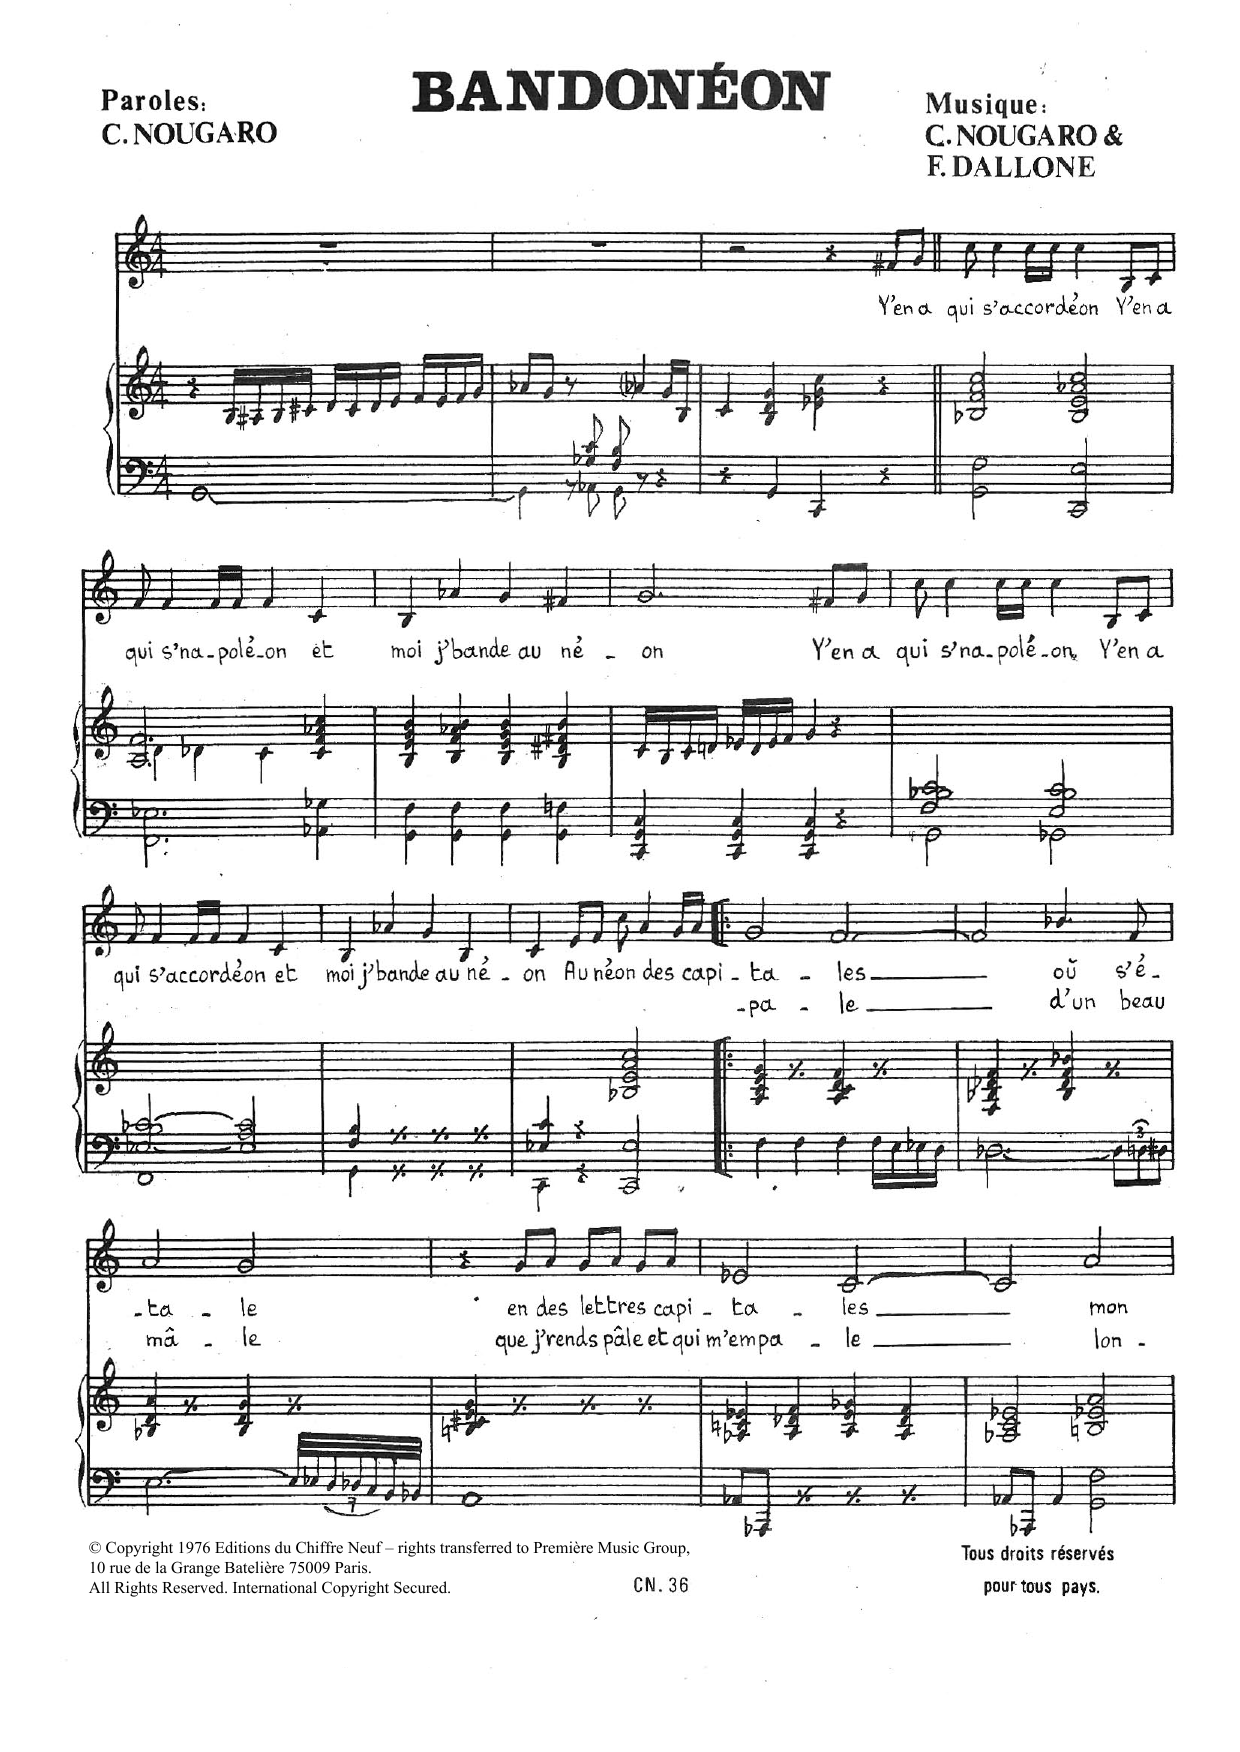 Claude Nougaro Bandoneon Sheet Music Notes & Chords for Piano & Vocal - Download or Print PDF